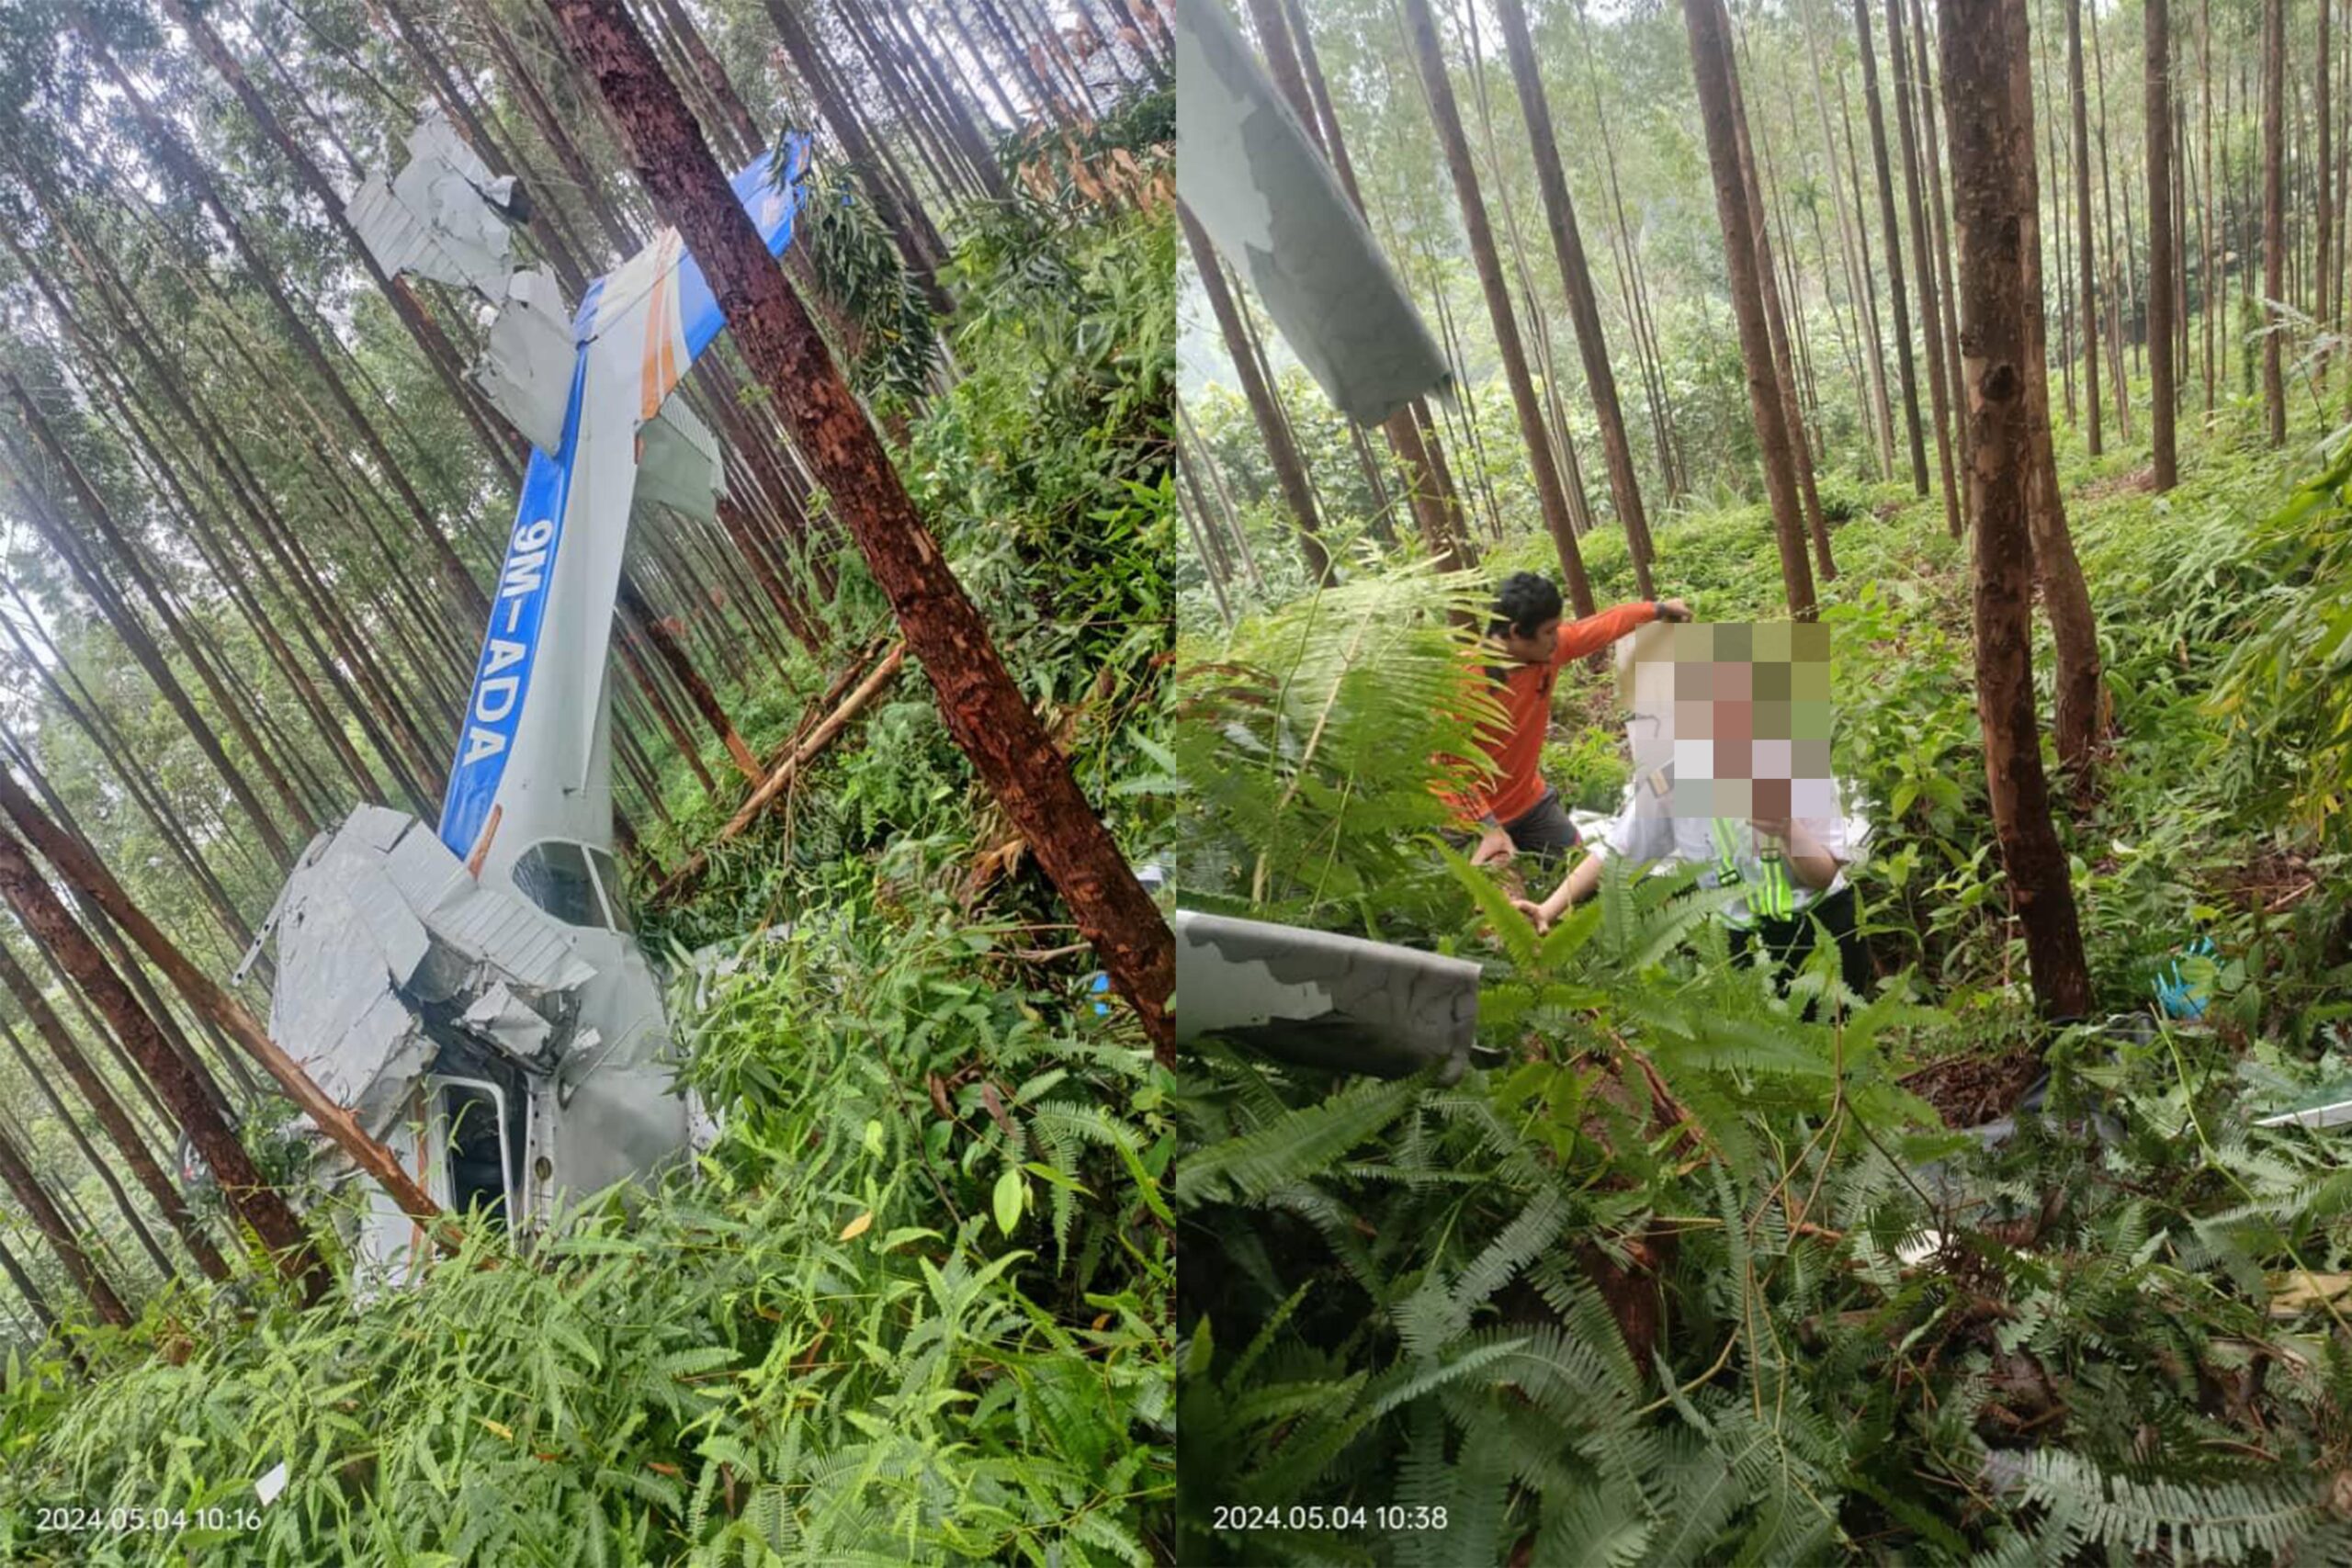 Sungkai plane crash: police attribute foggy weather as factor